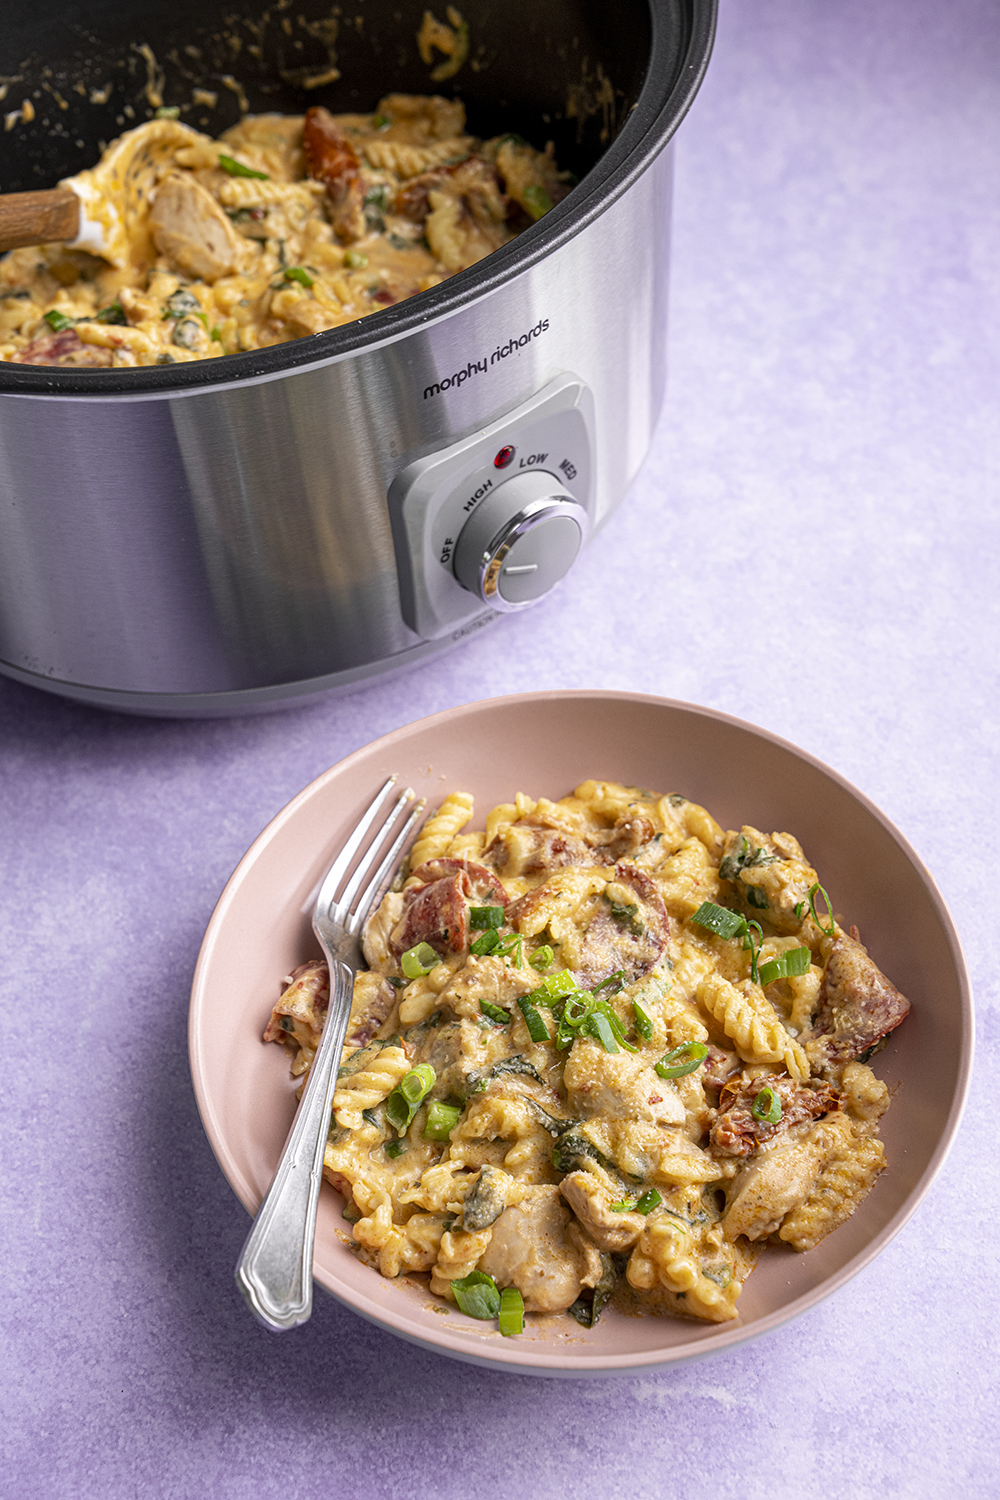 https://glutenfreecuppatea.co.uk/wp-content/uploads/2022/07/slow-cooker-creamy-chicken-pasta-featured.jpg